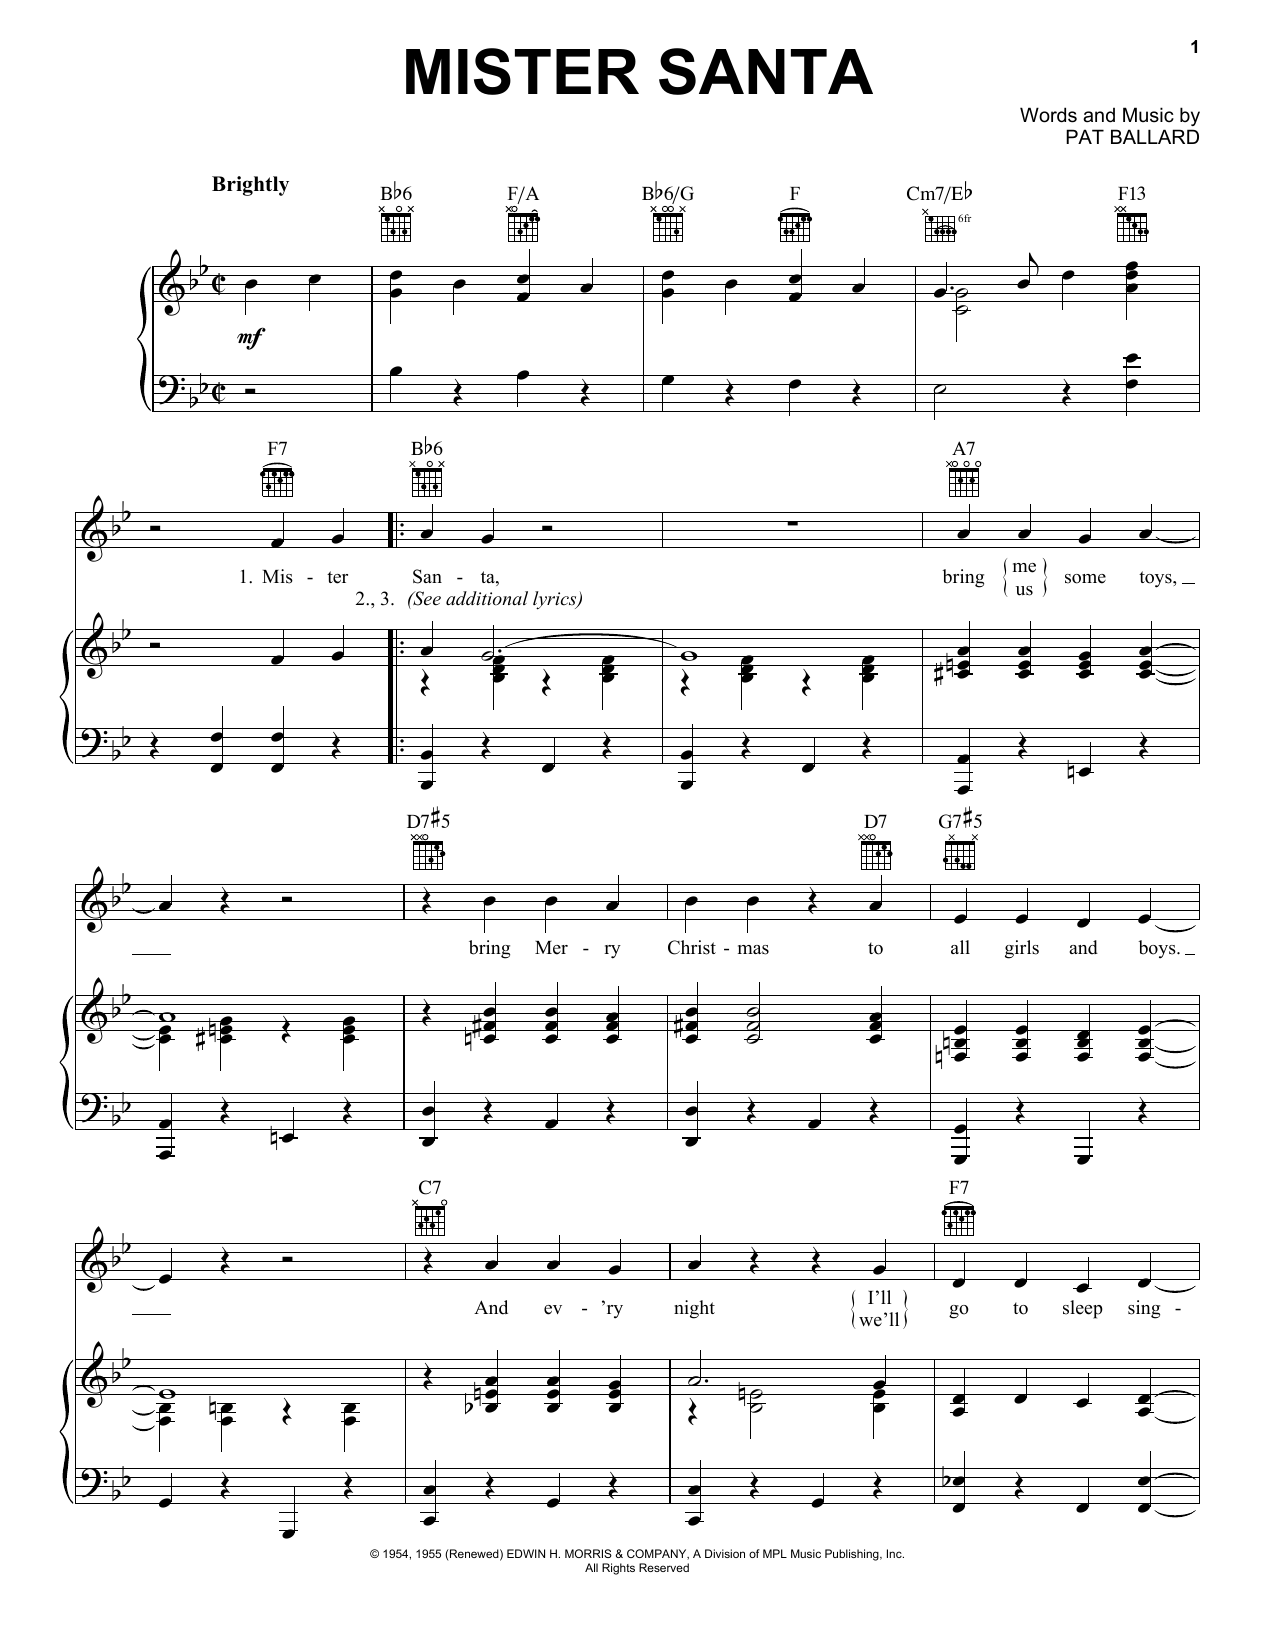 Pat Ballard Mister Santa Sheet Music Notes & Chords for Melody Line, Lyrics & Chords - Download or Print PDF